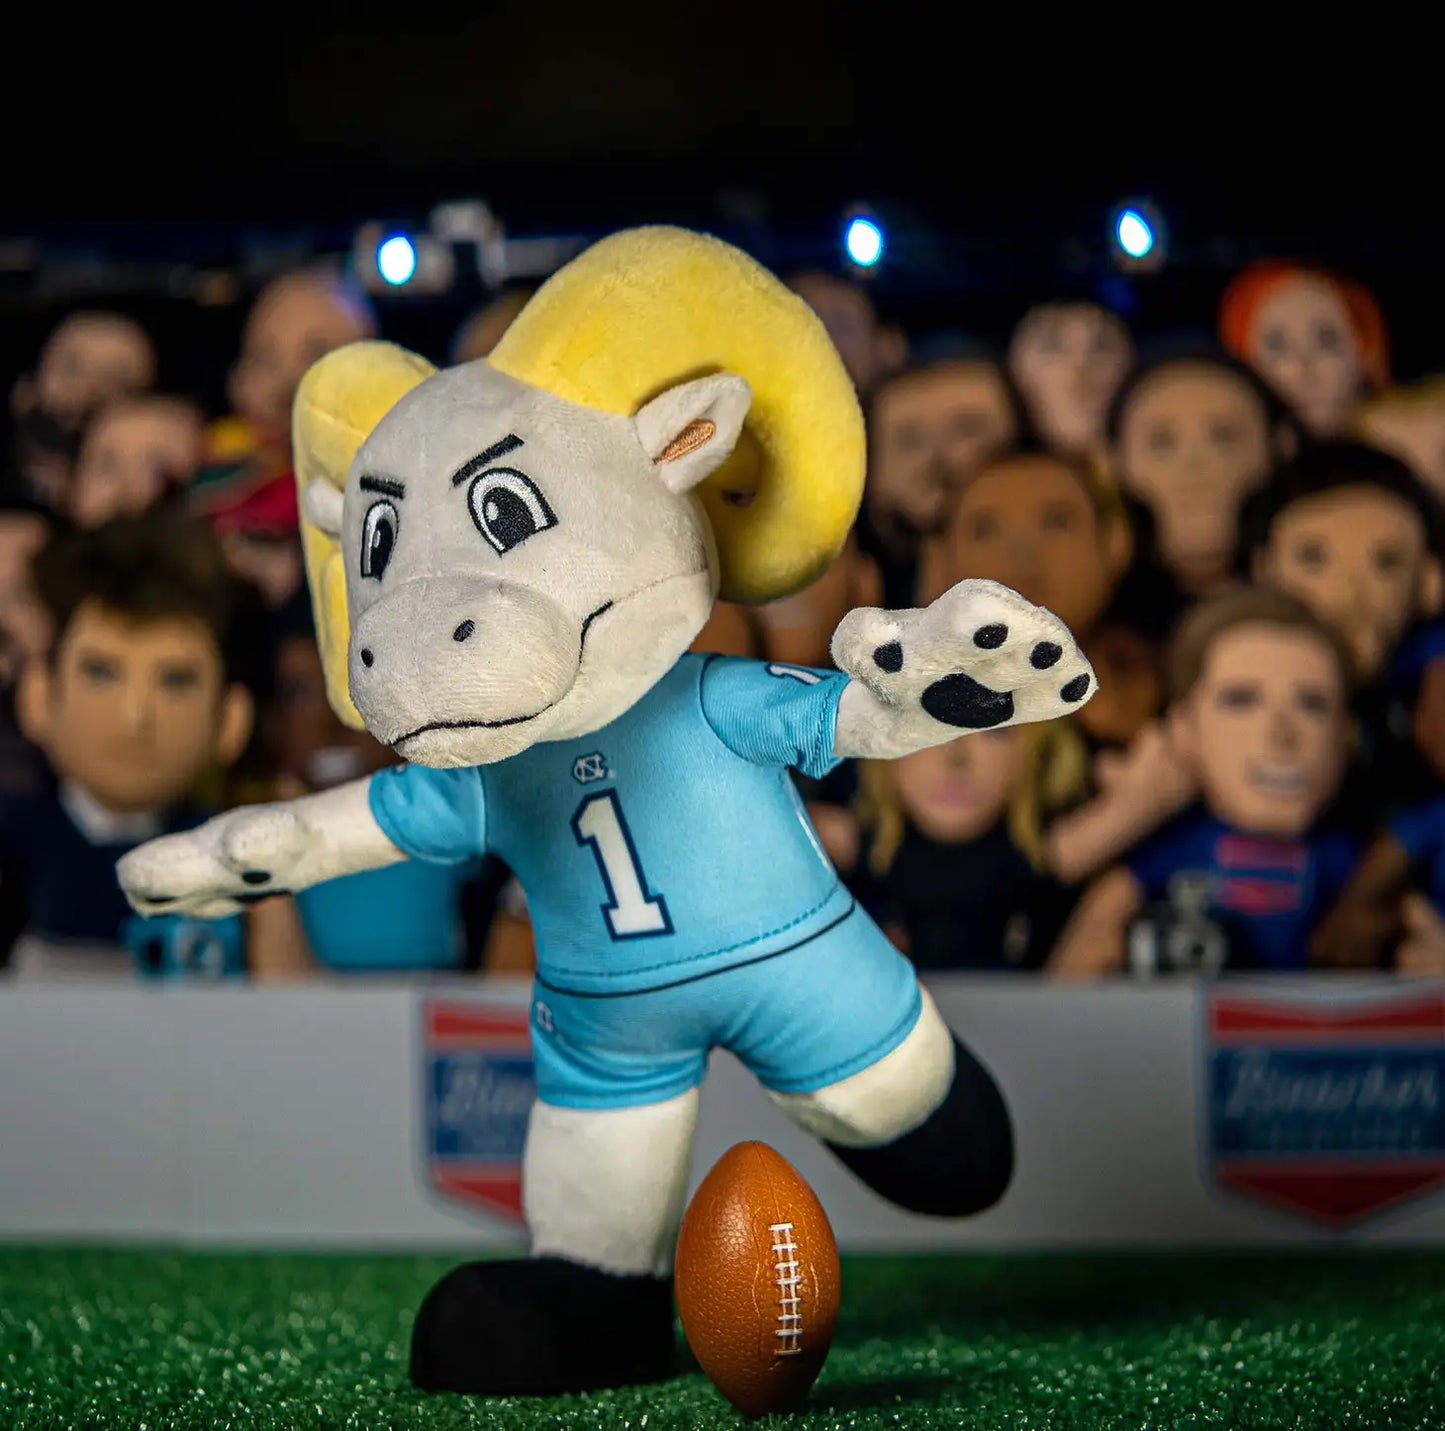 UNC Rameses Stuffed Animal Plush Mascot in ACC Football Uniform